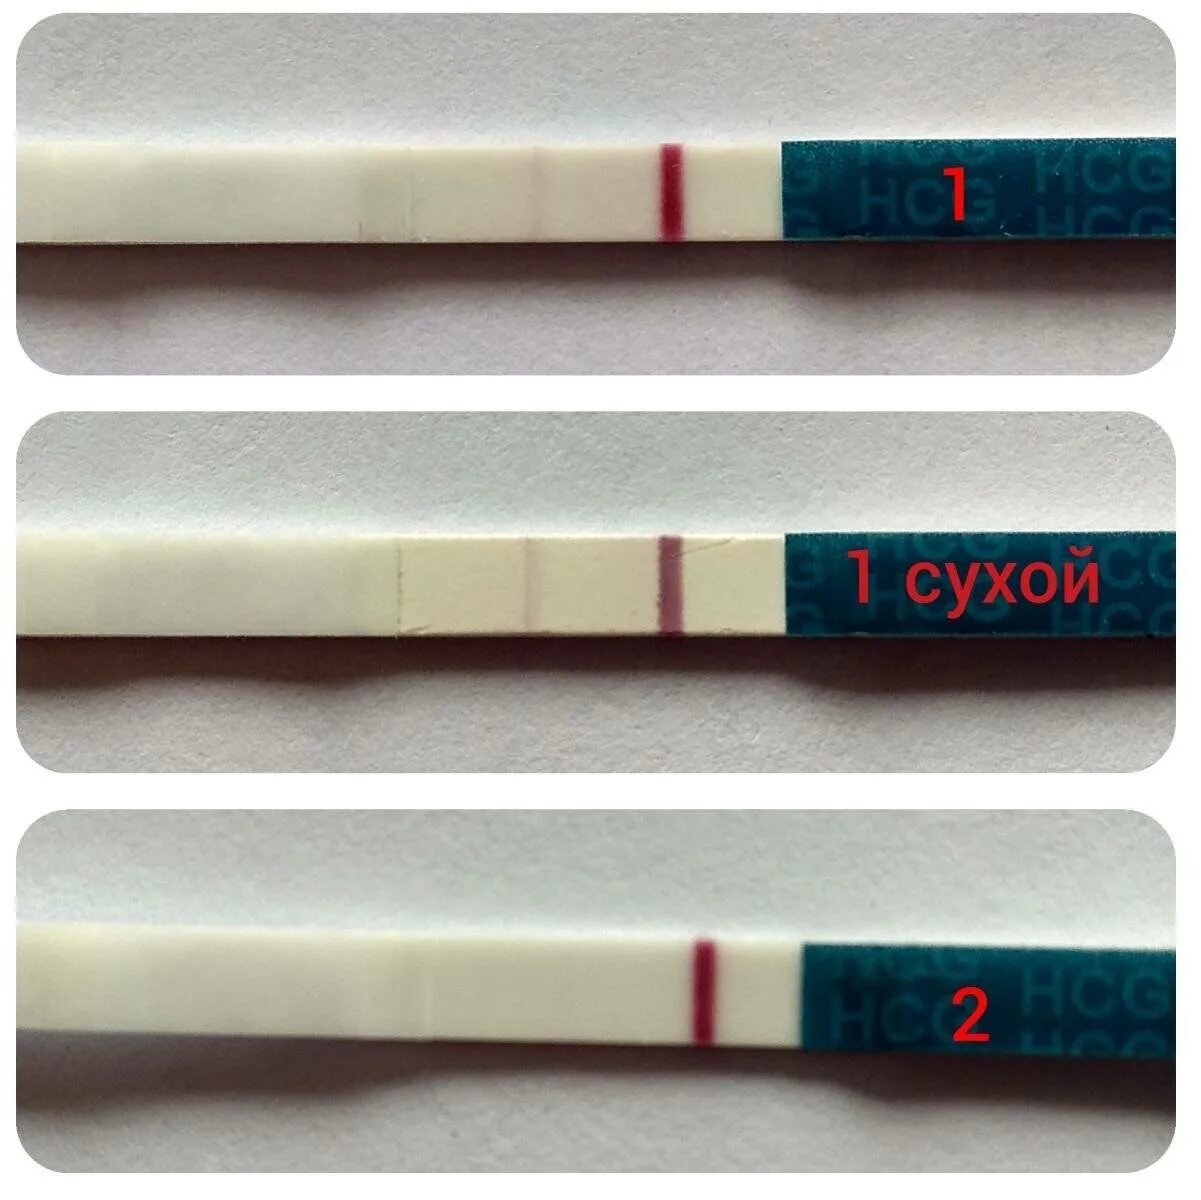 Тест 2 20 году. Реагент тест на беременность. Тест фраутест с 2 тест полосками. Тест на беременность одна полоска вторая реагент. Тест на беременность HCG 2 полоски.